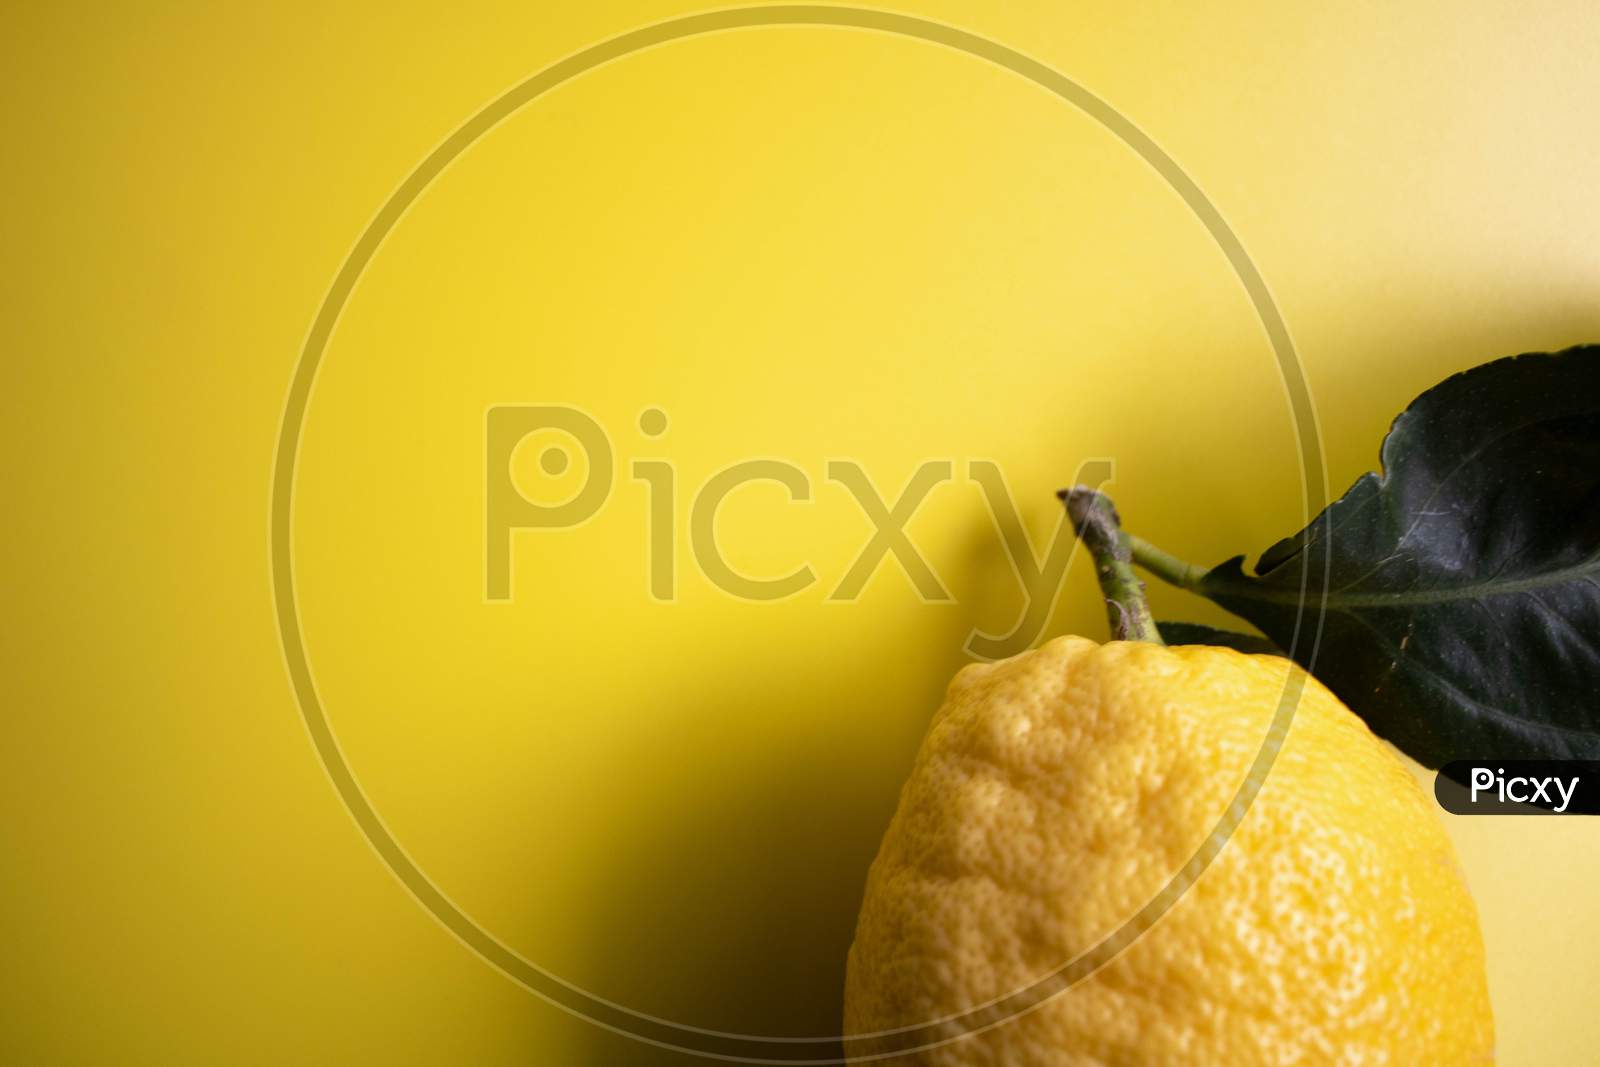 A Different Kind Of Lemon